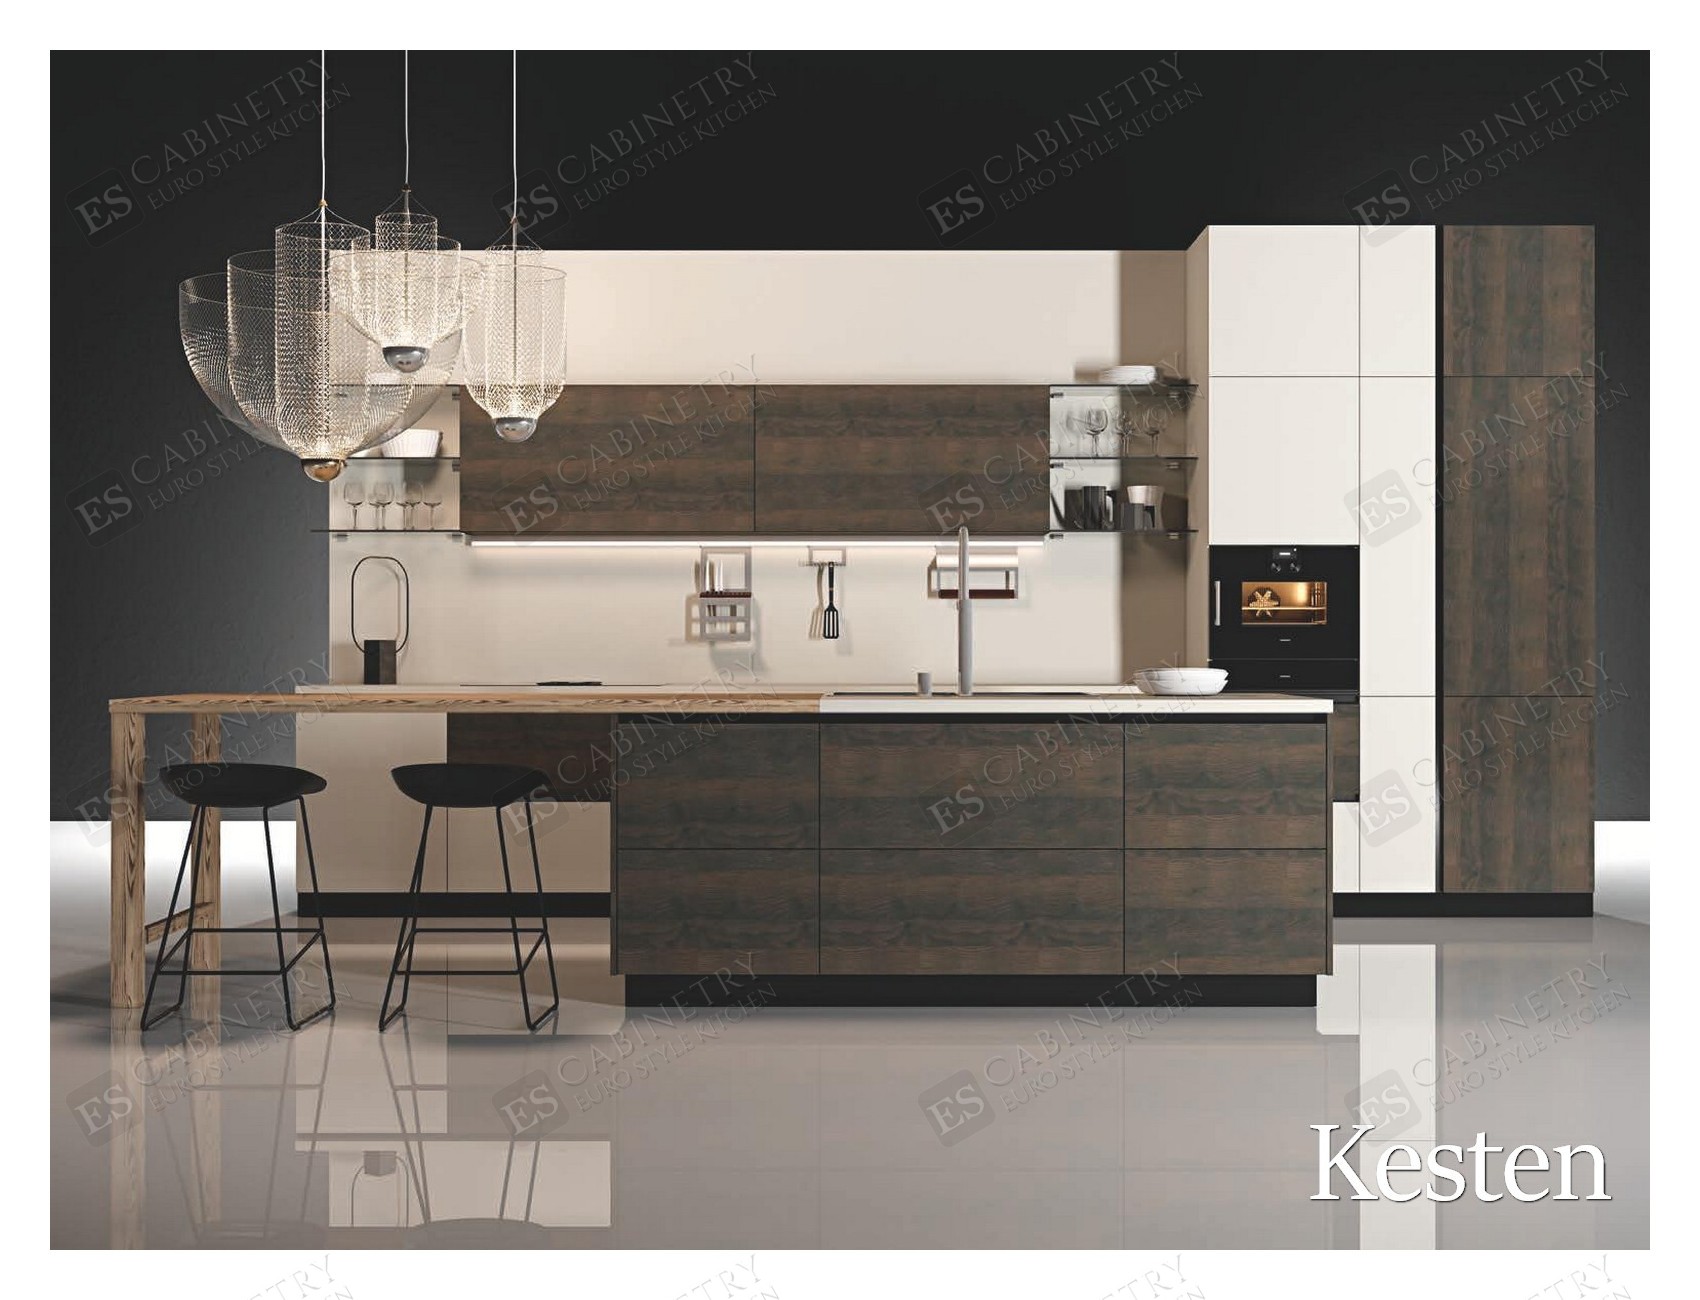 Kesten | European style kitchen design